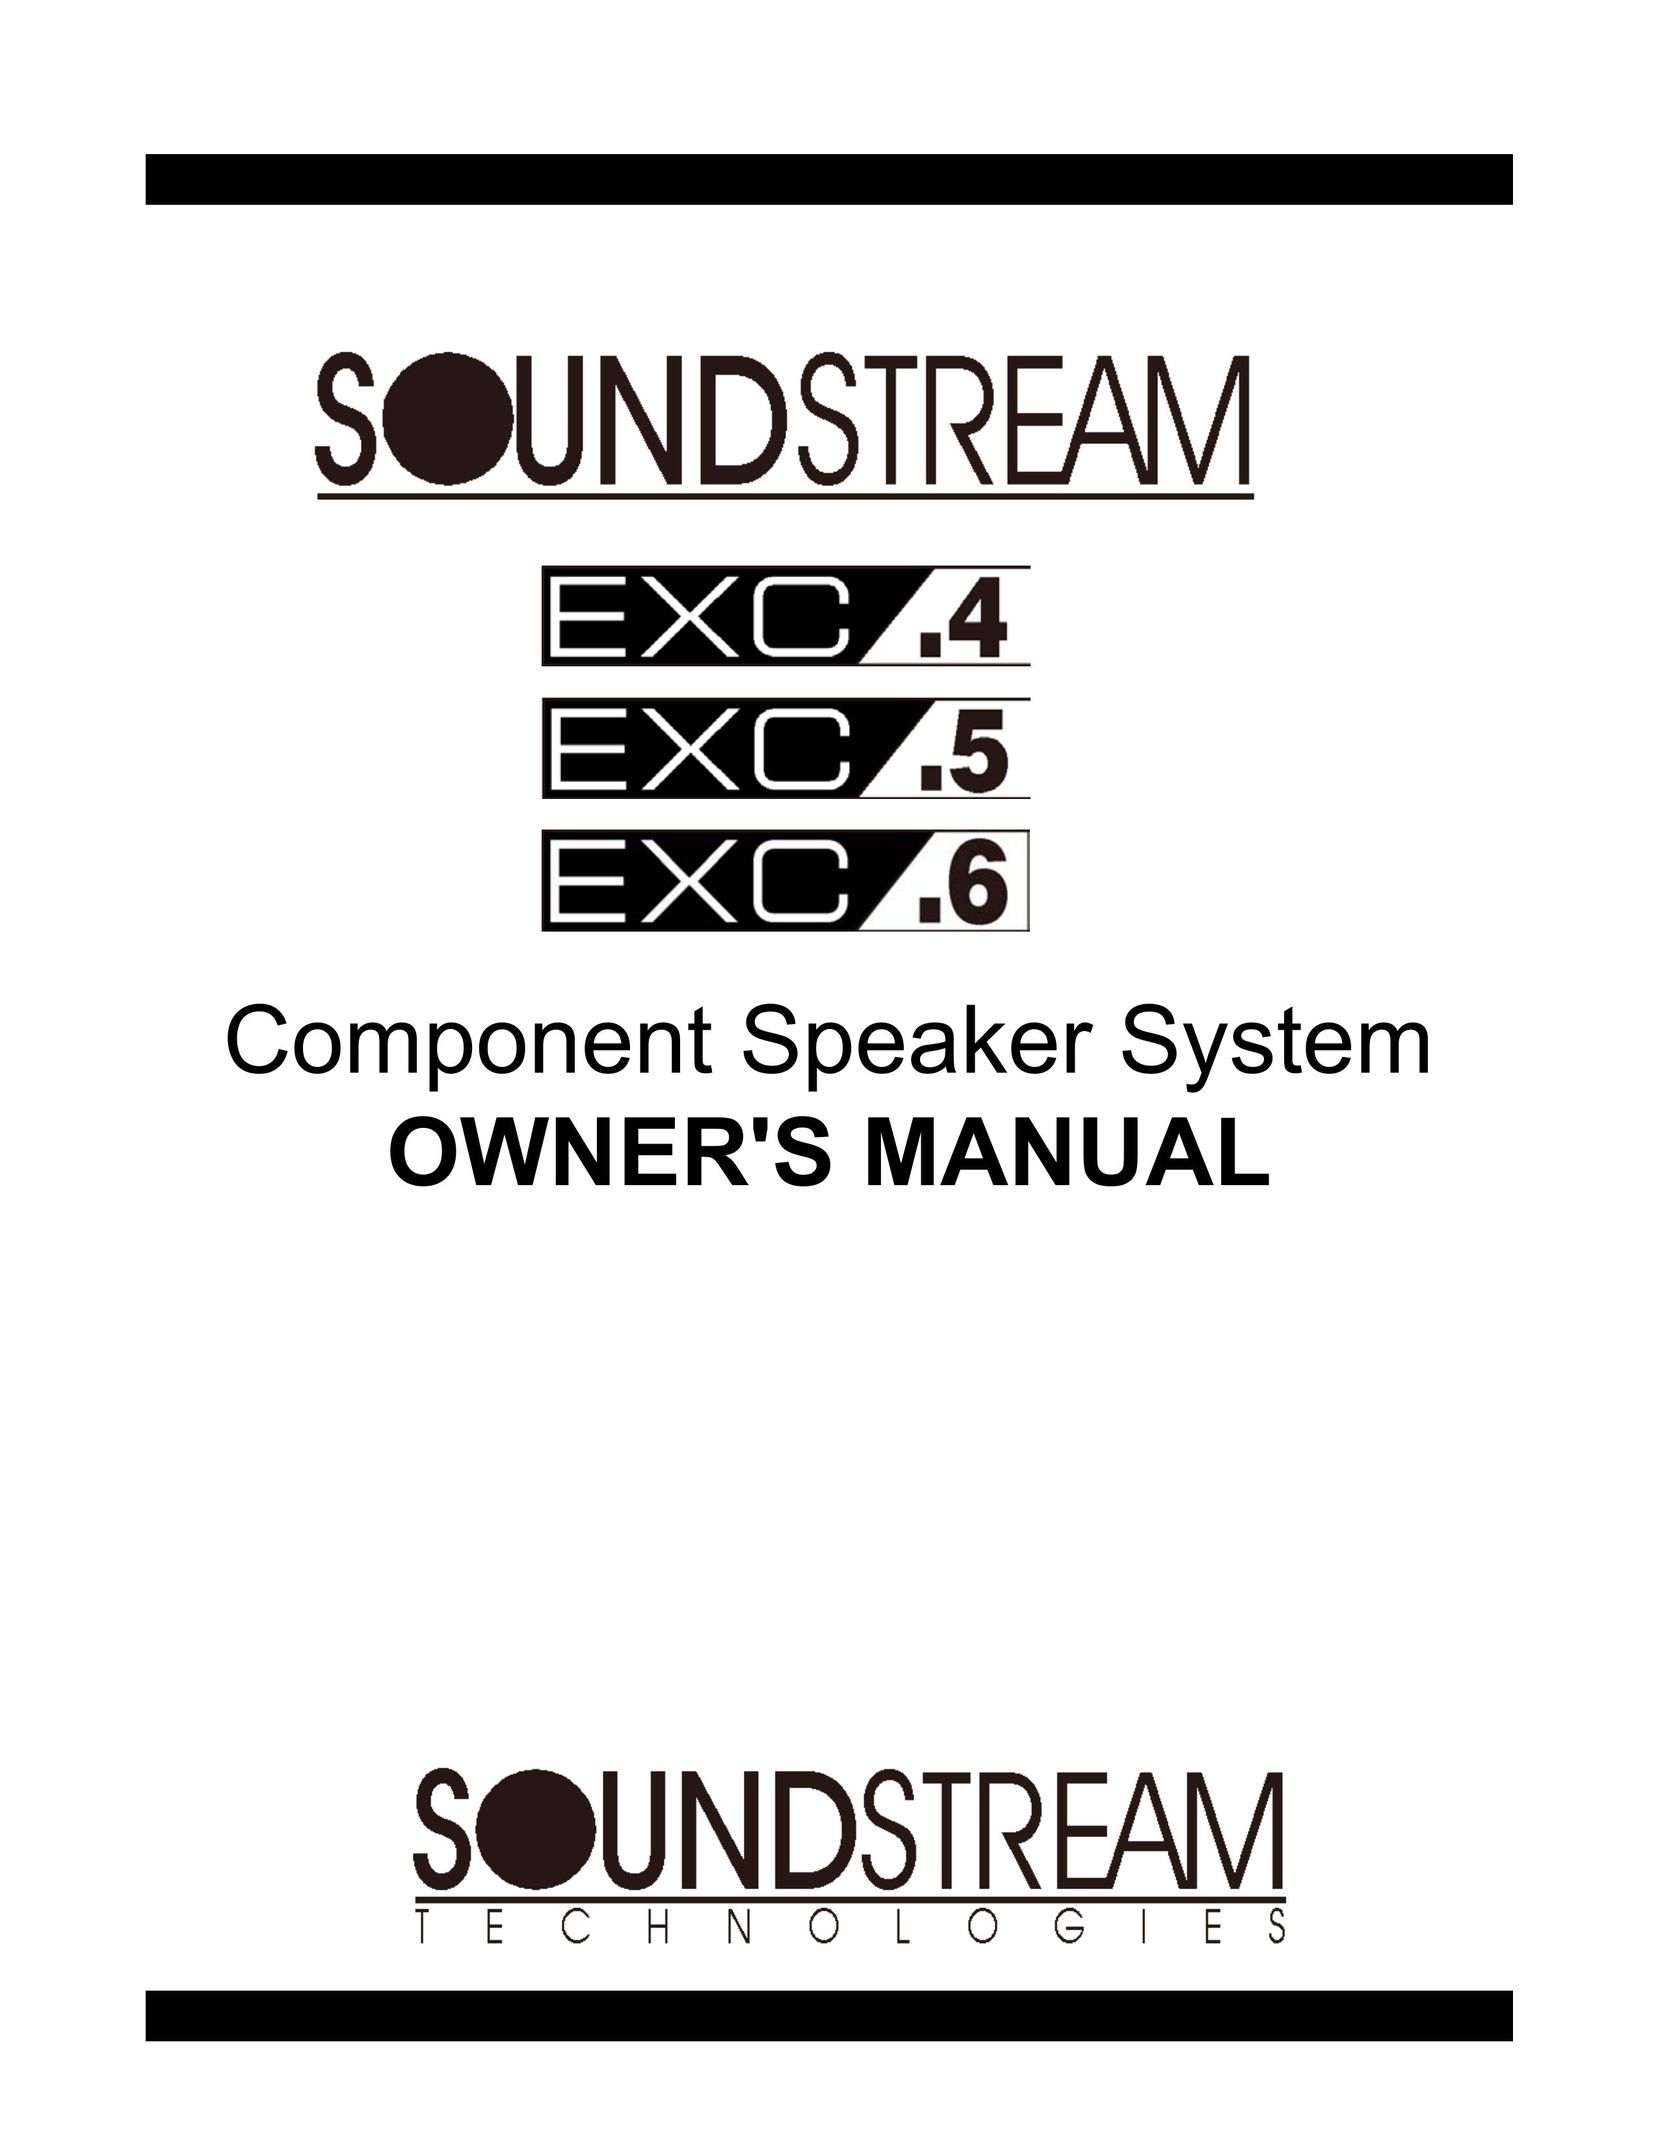 Soundstream Technologies EXC.4 Speaker System User Manual